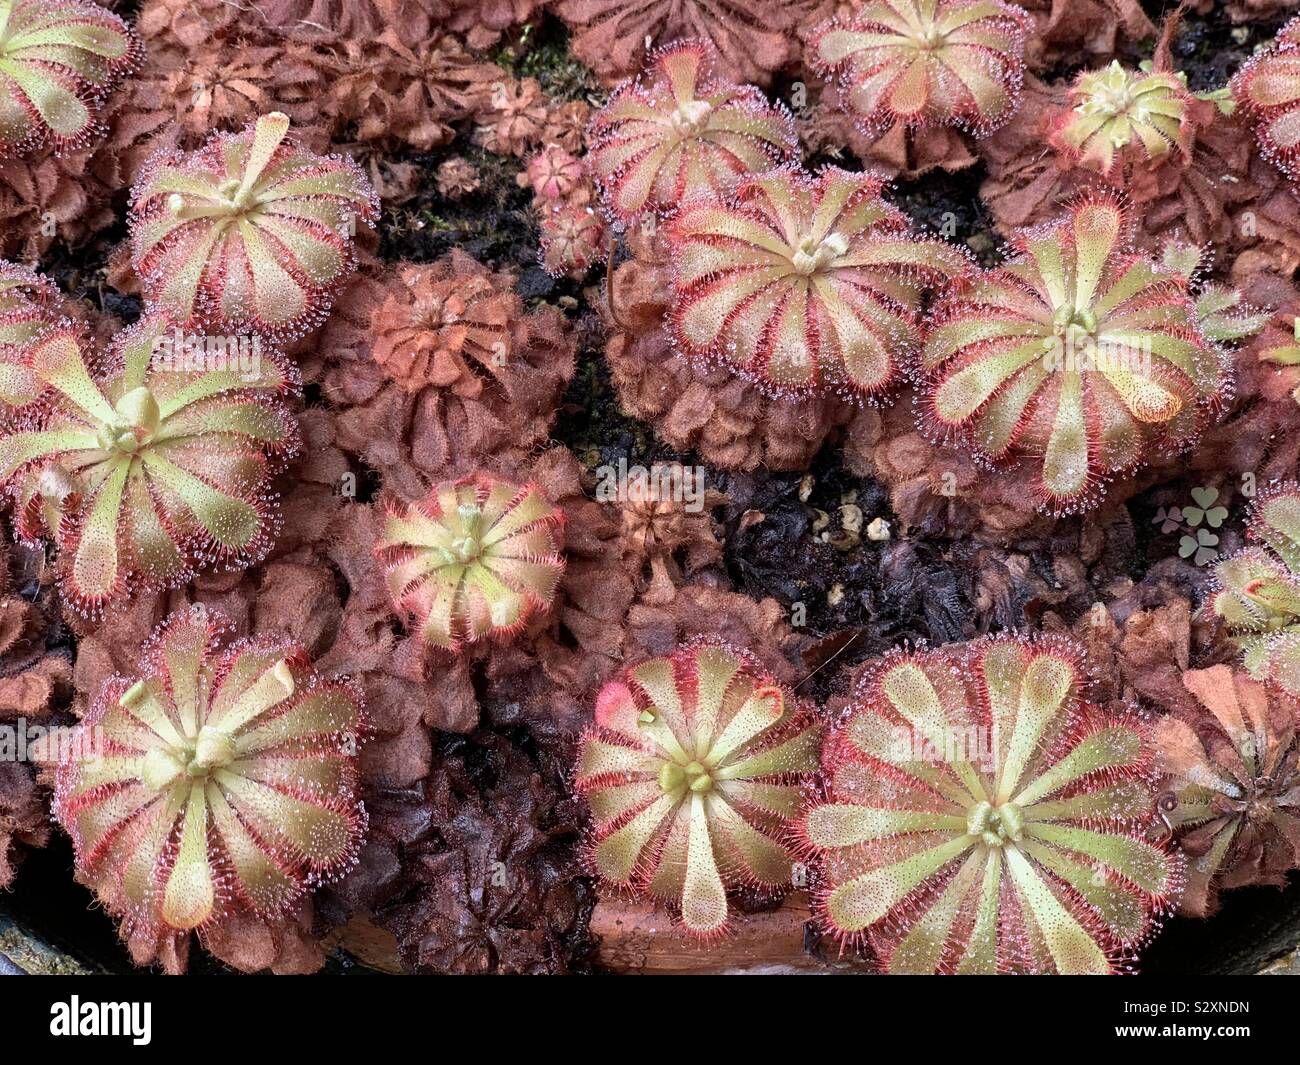 Drosera aliciae, carnivorous plant Stock Photo